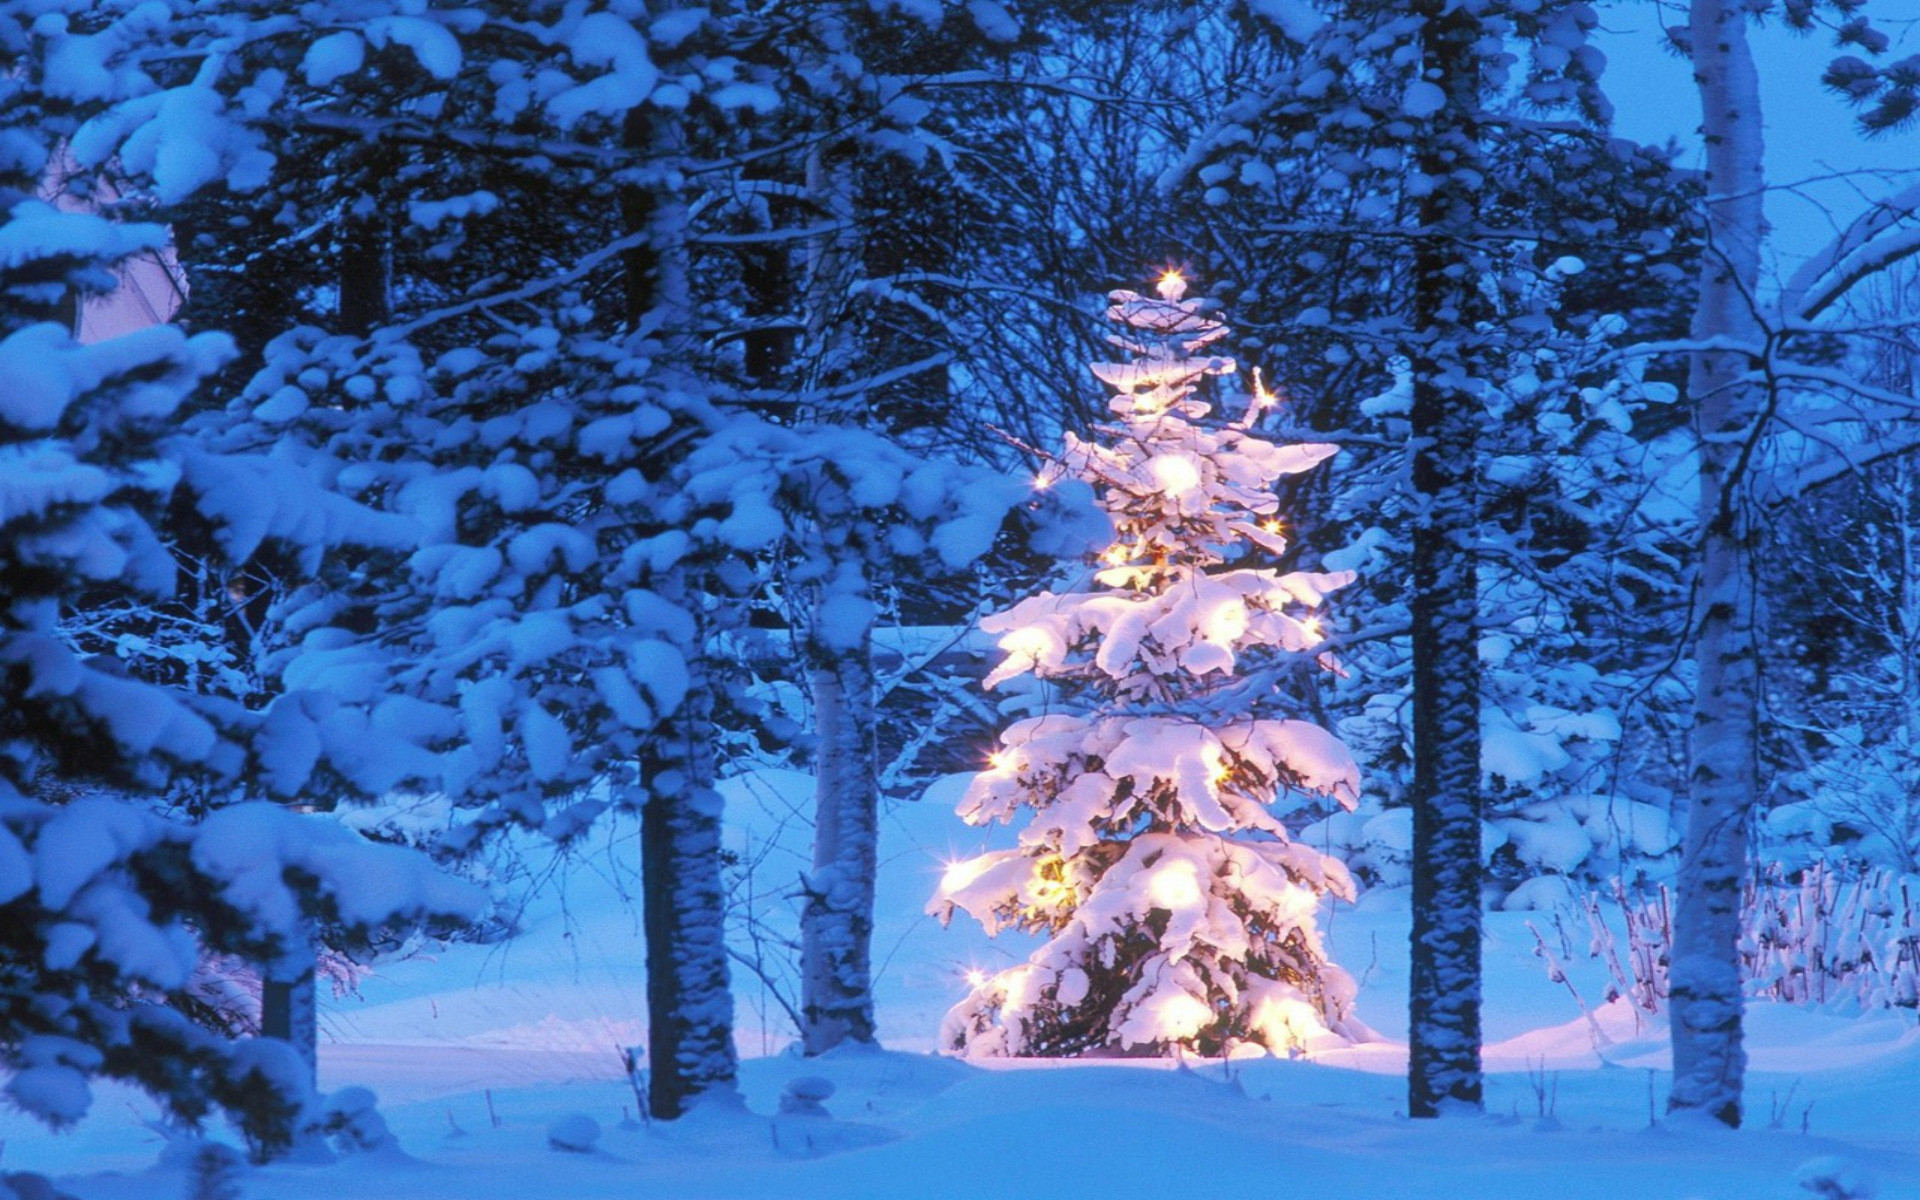 Christmas Tree Desktop Background Image